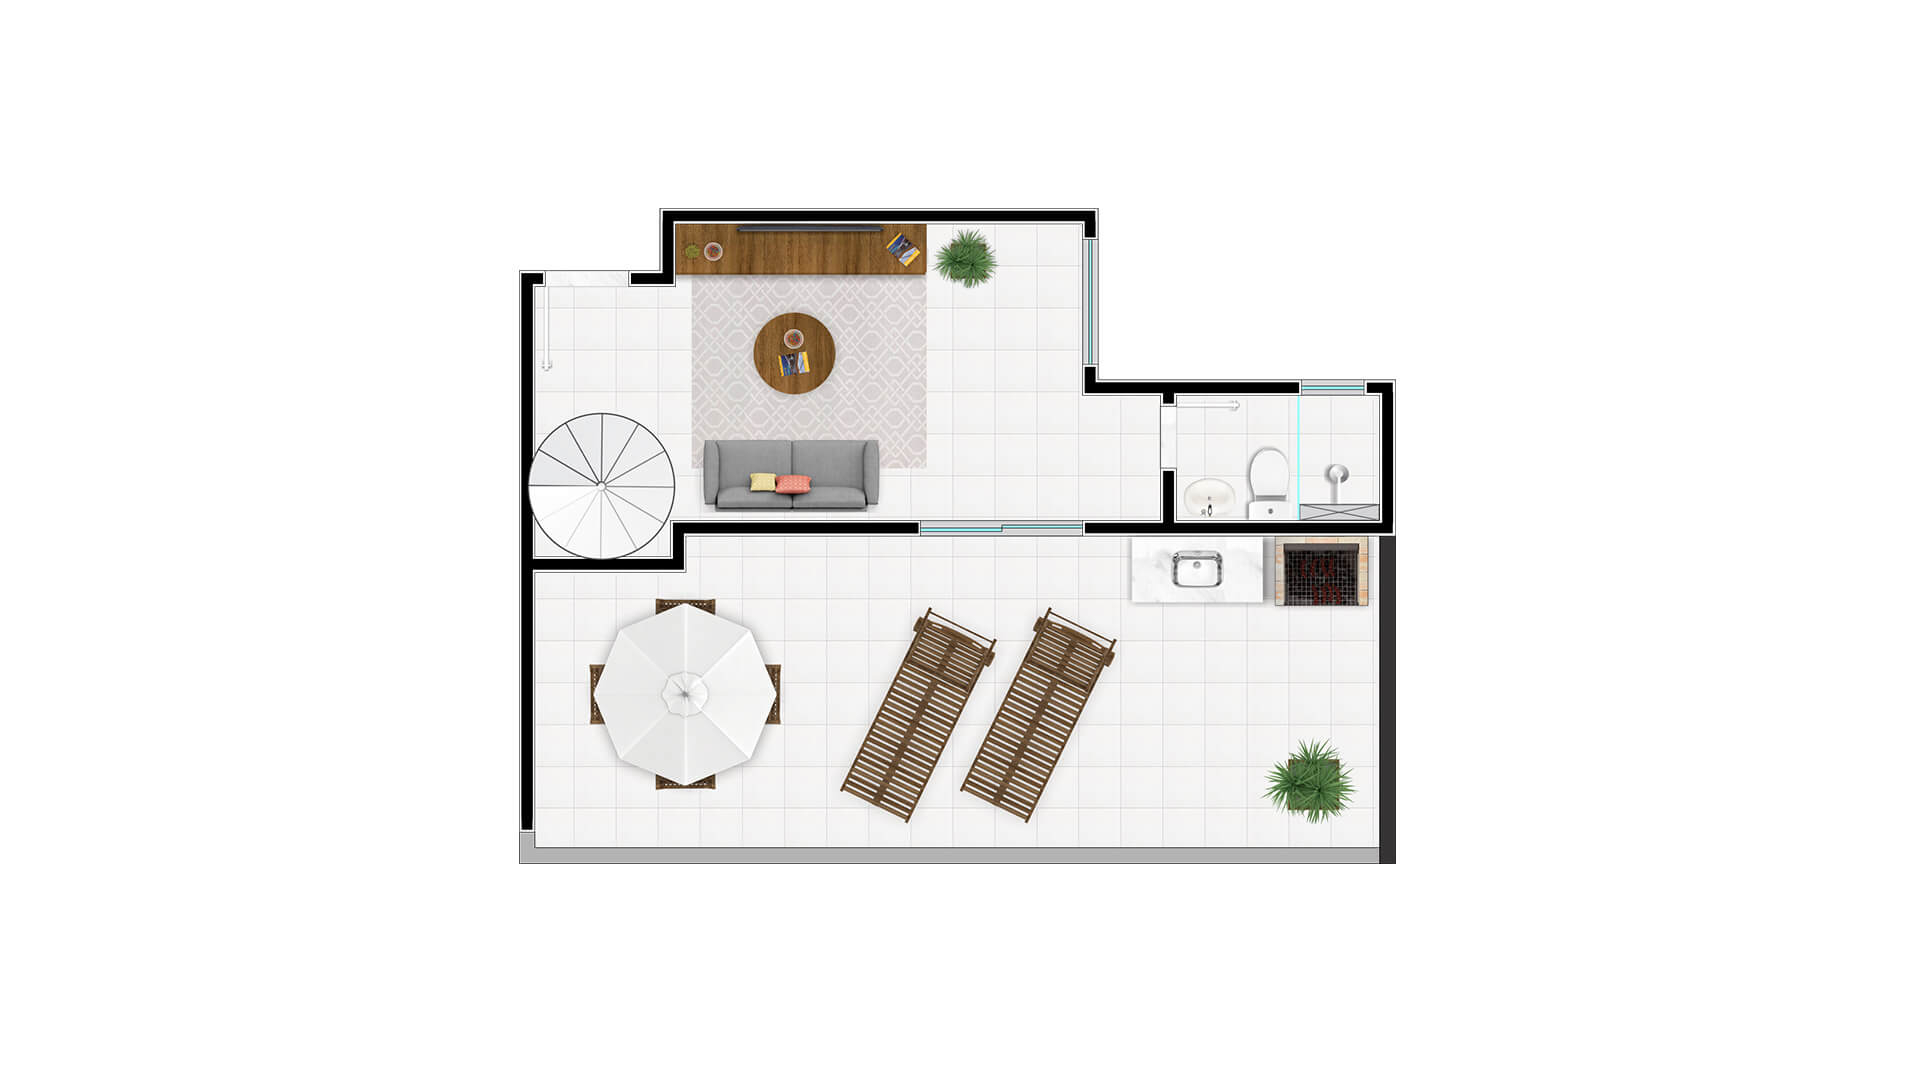 Cobertura Tipo 2 - 2º andar - Millennium Residence